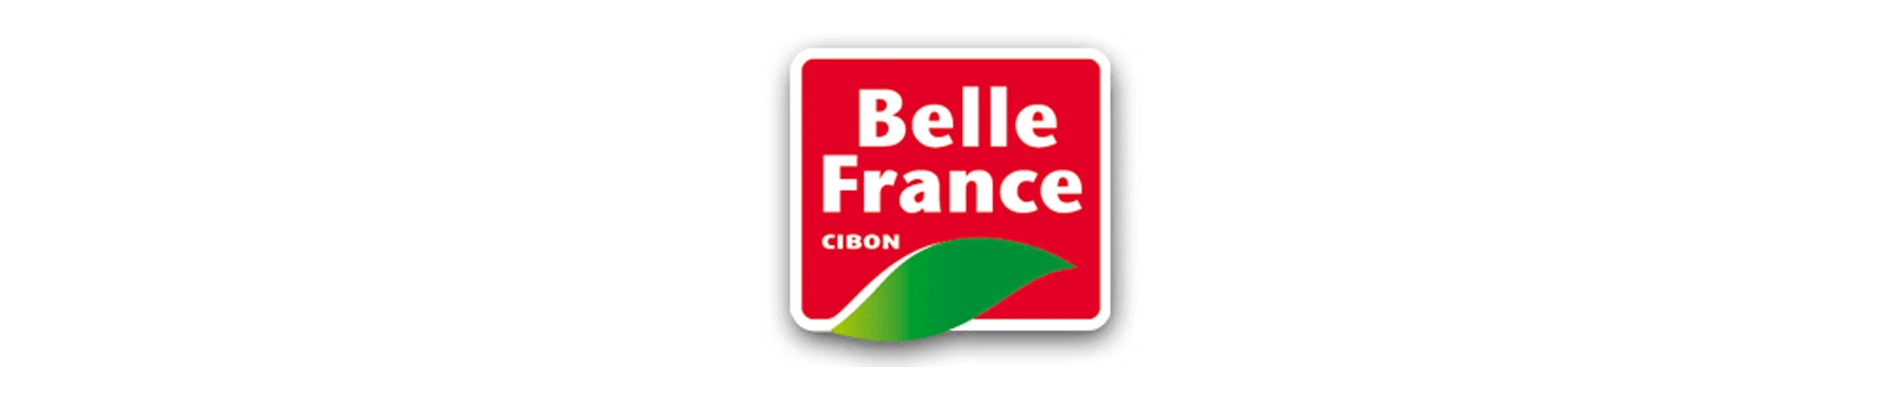 Belle francaise hd